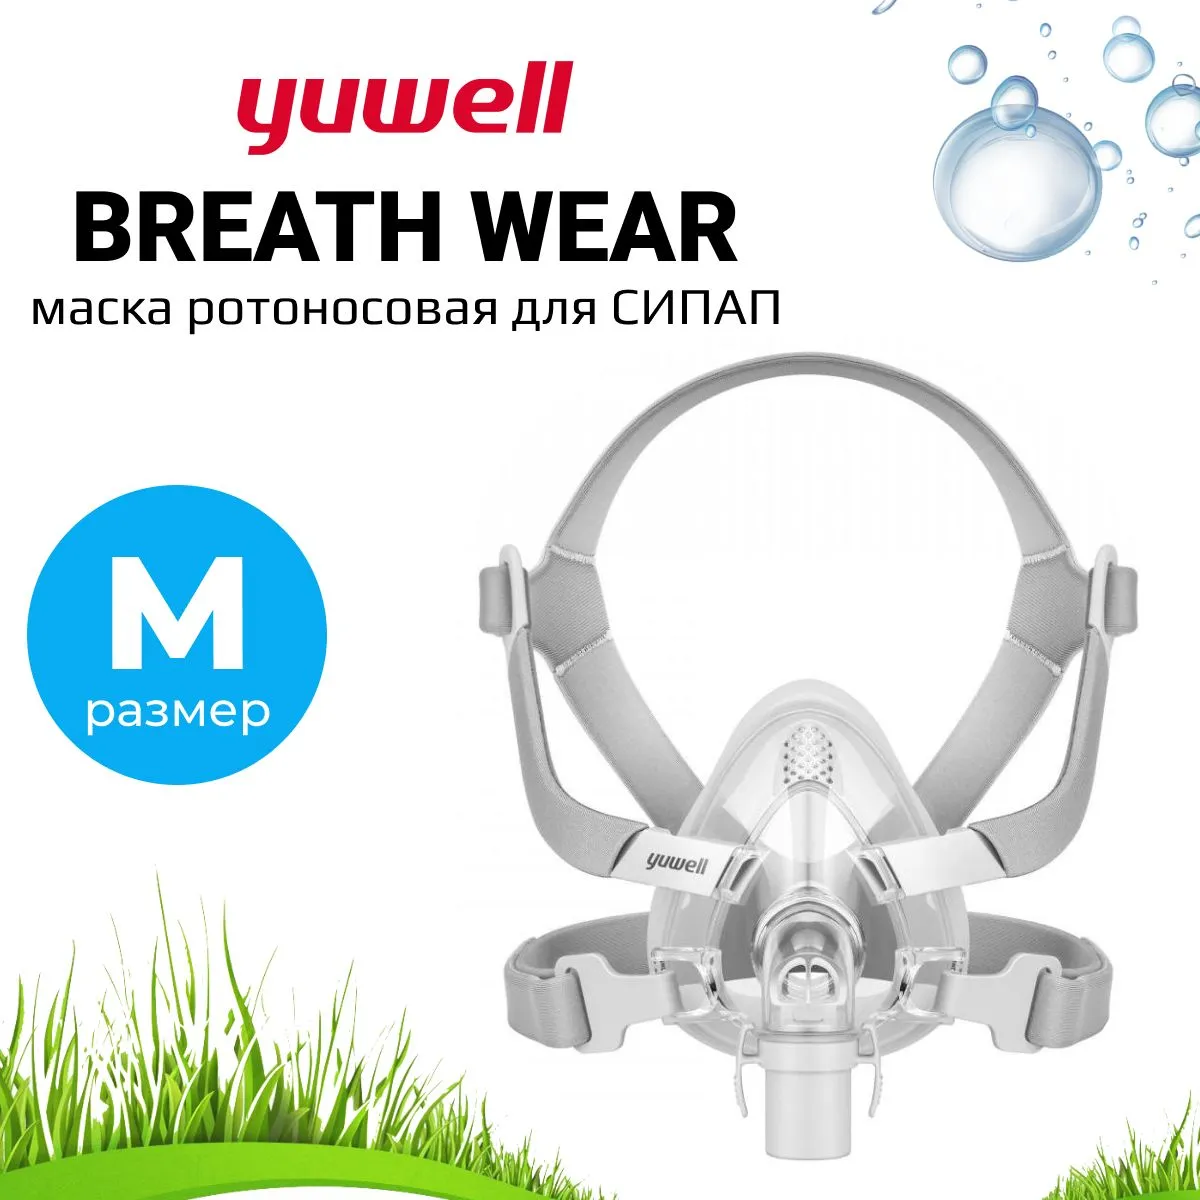 Ротоносовая Маска Yuwell BreathWear Series YF-02 (Размер M) для СИПАП